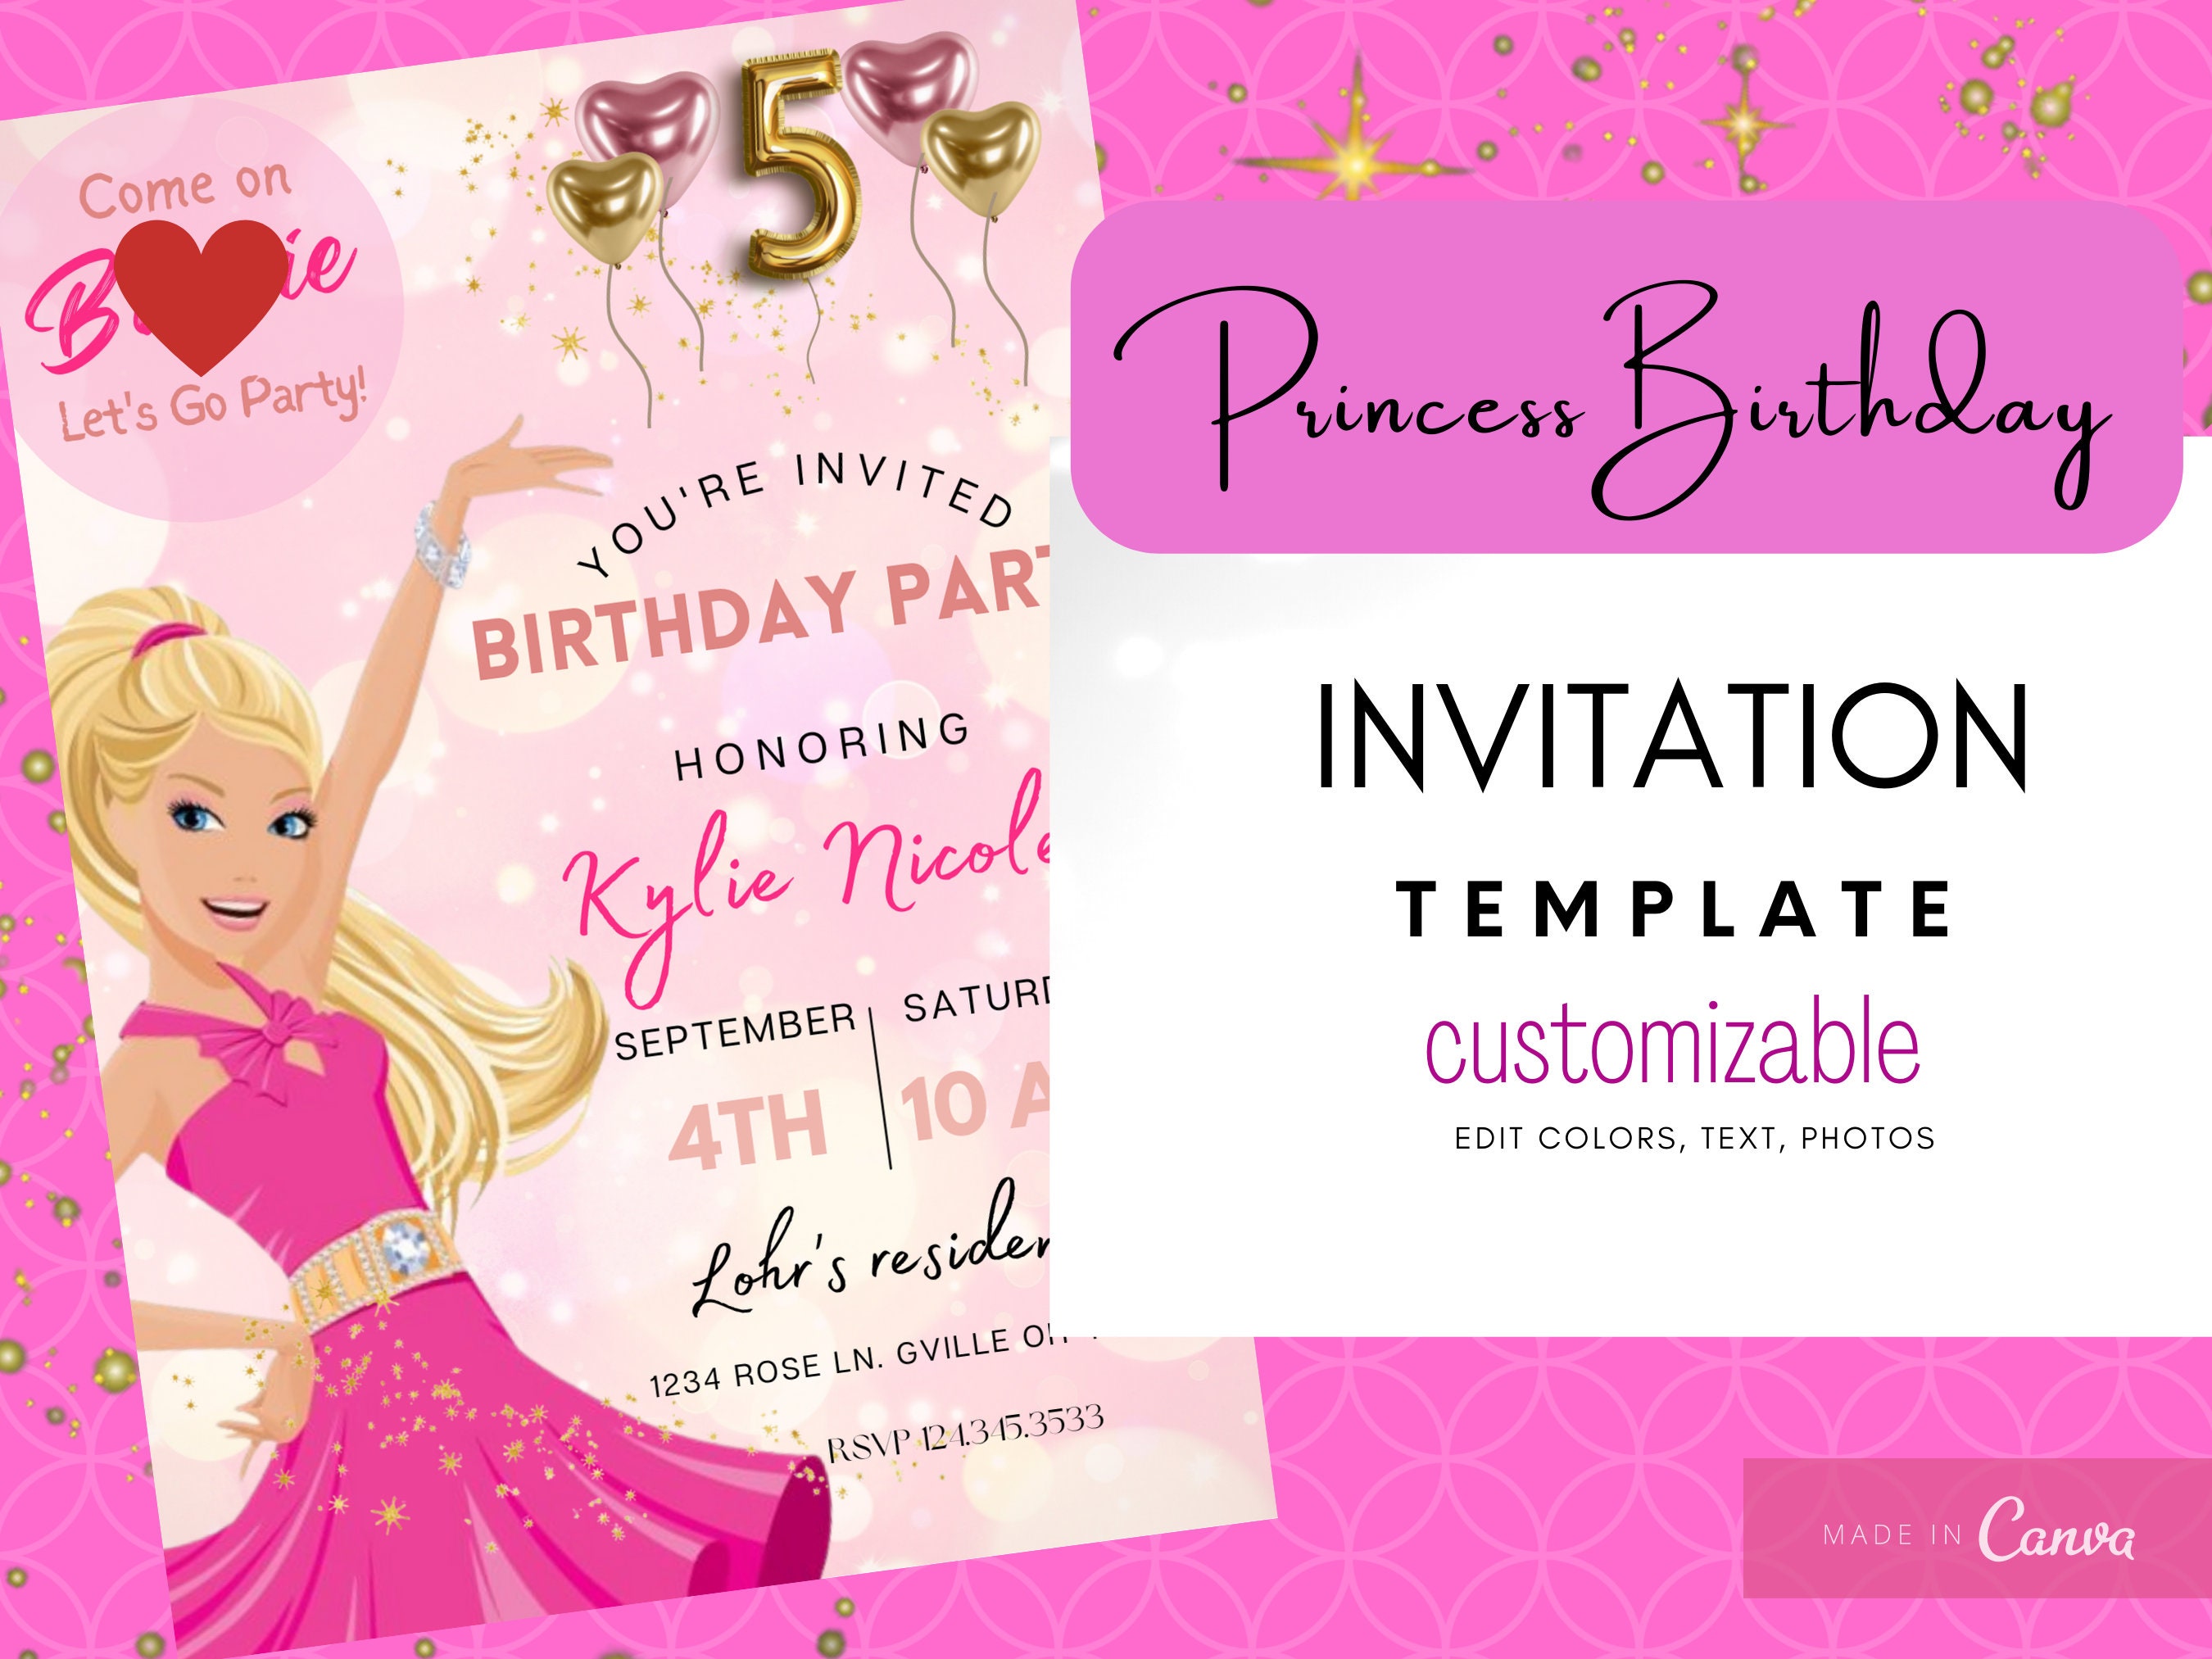 Barbie Themed Birthday Party Invitation Ph